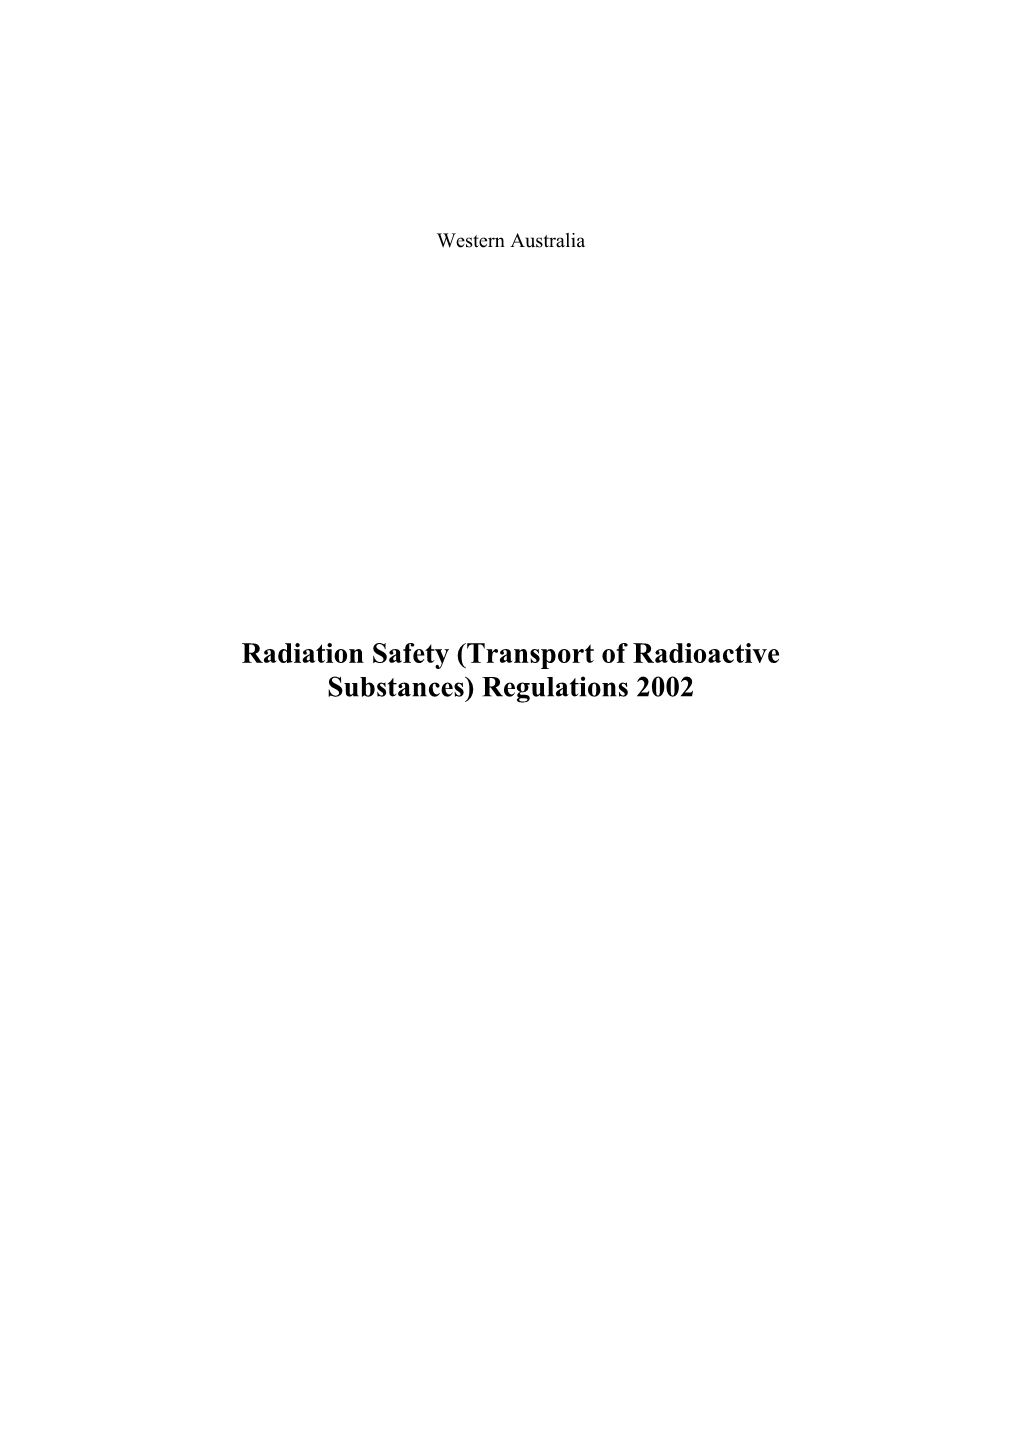 Radiation Safety (Transport of Radioactive Substances) Regulations 2002 - 00-A0-07